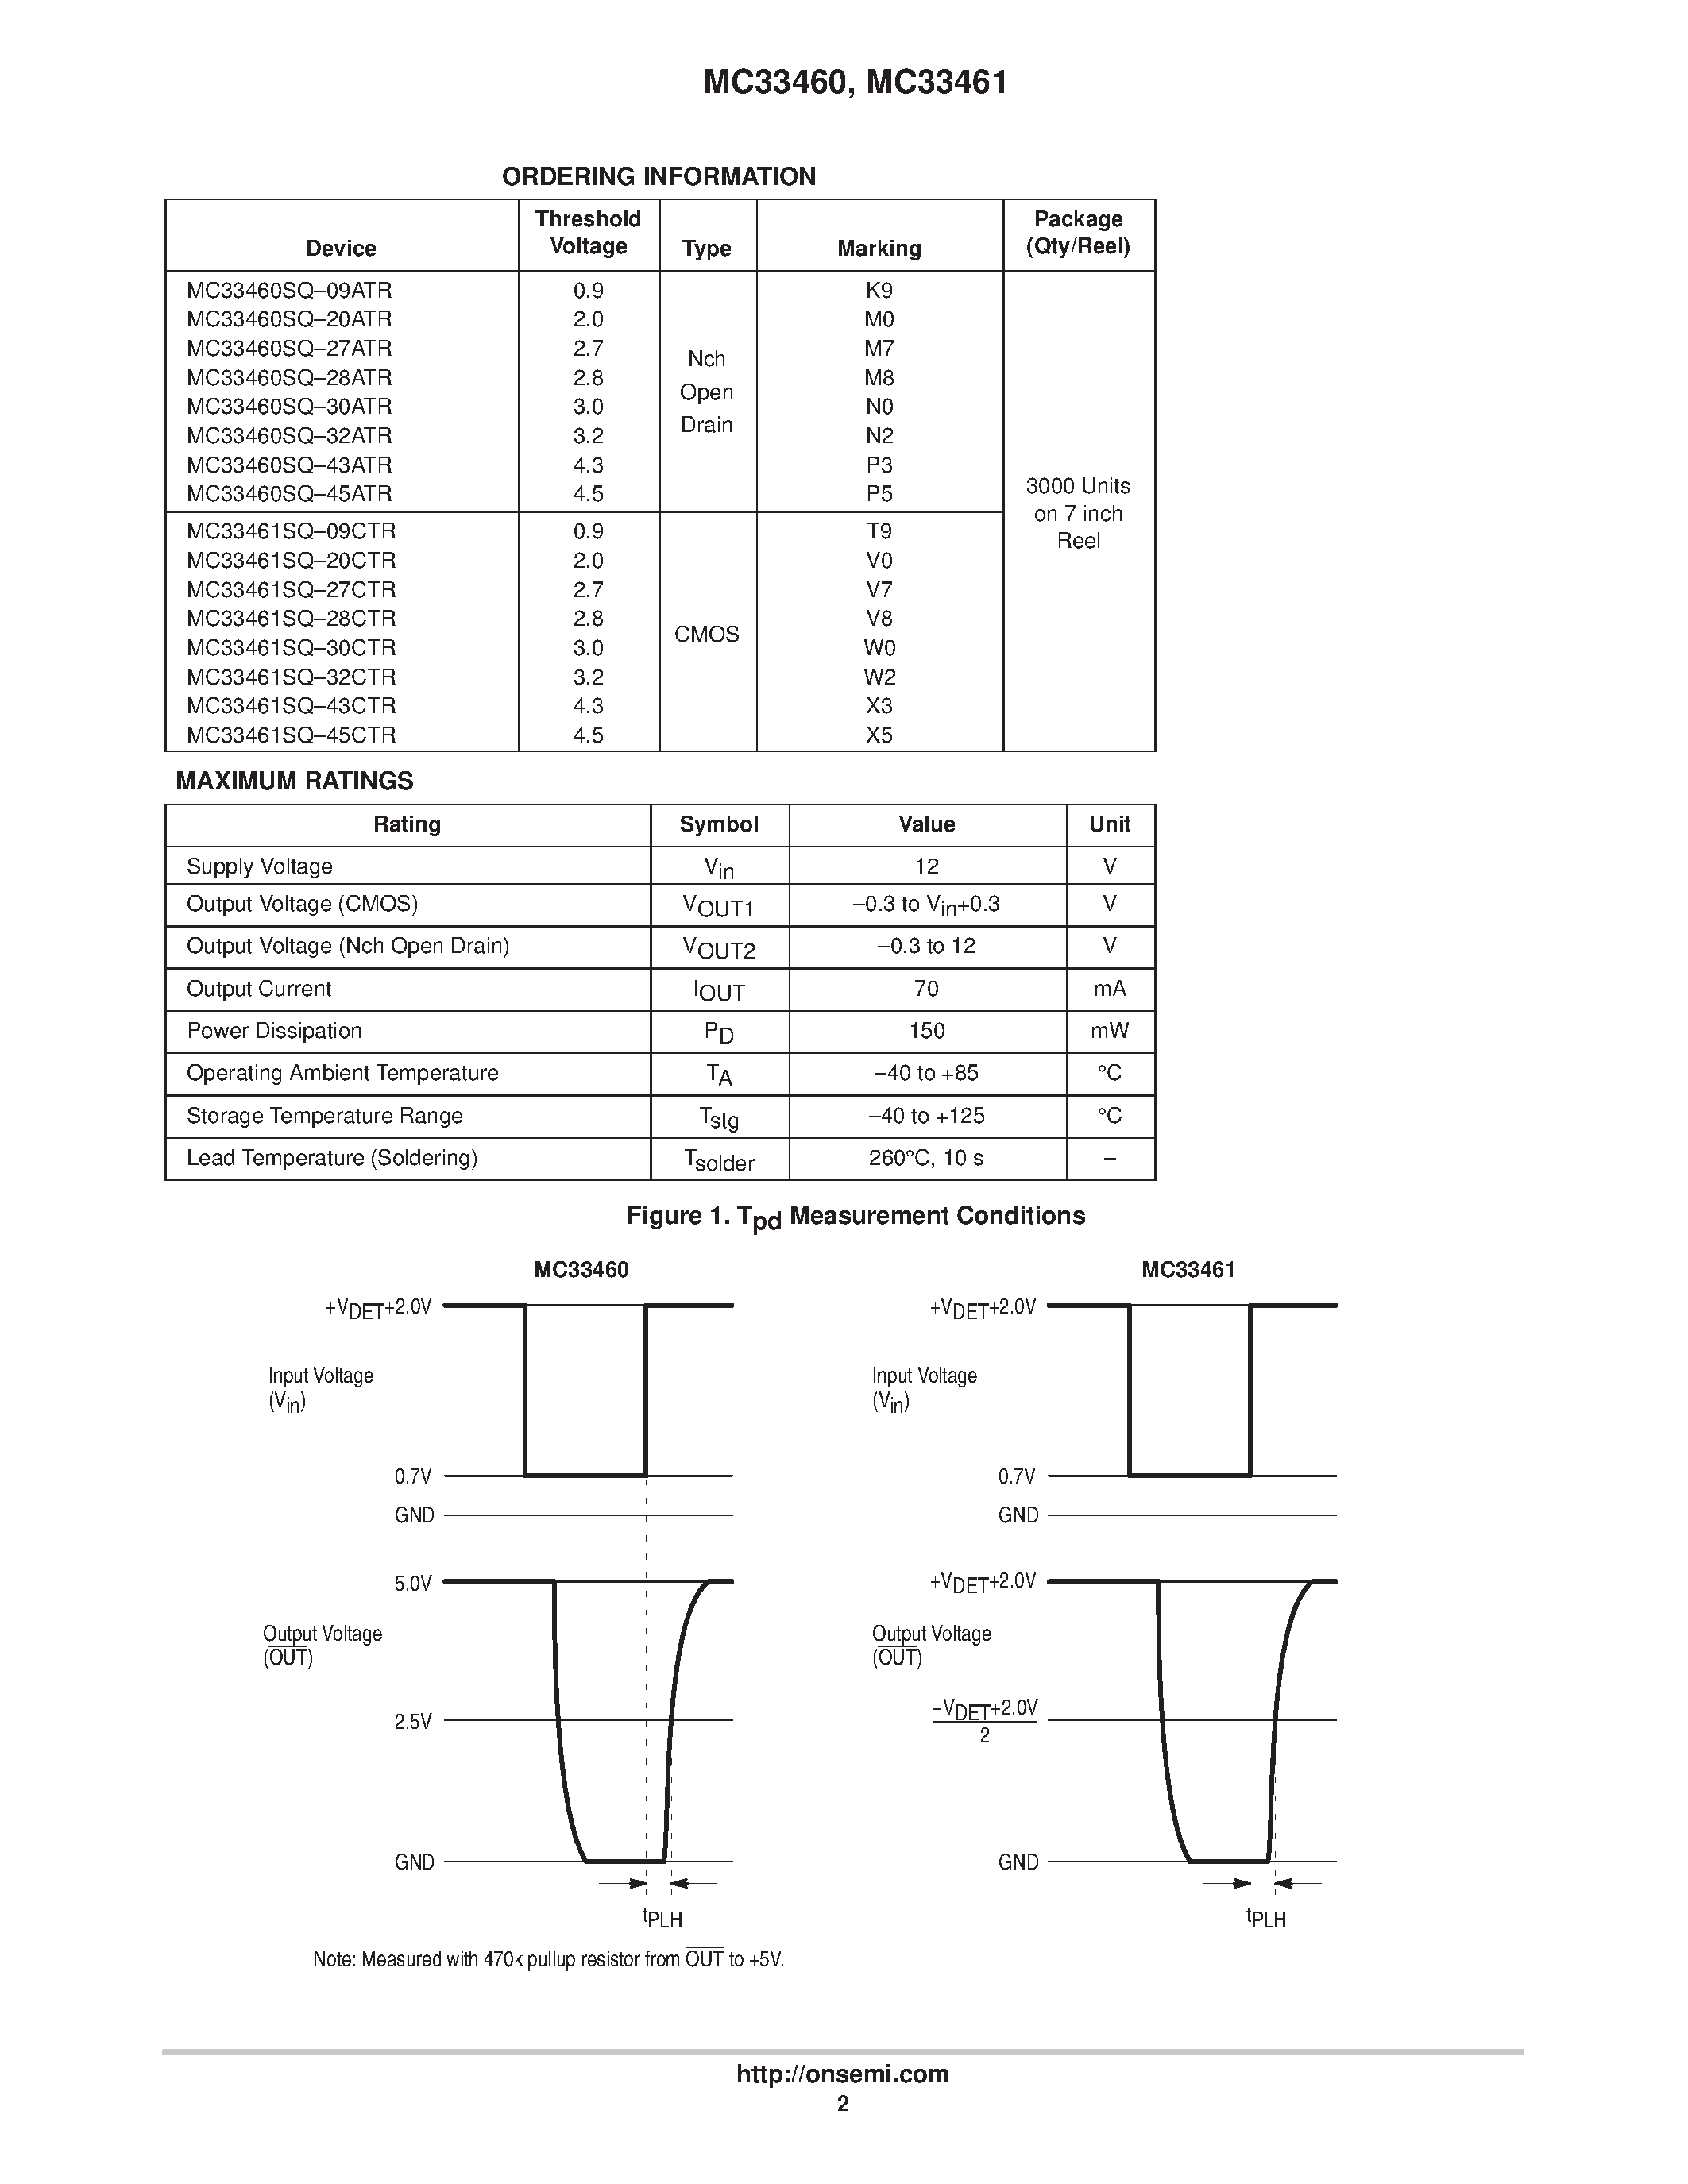 Datasheet MC33460 - (MC33460 / MC33461) Under Voltage Detector Series page 2